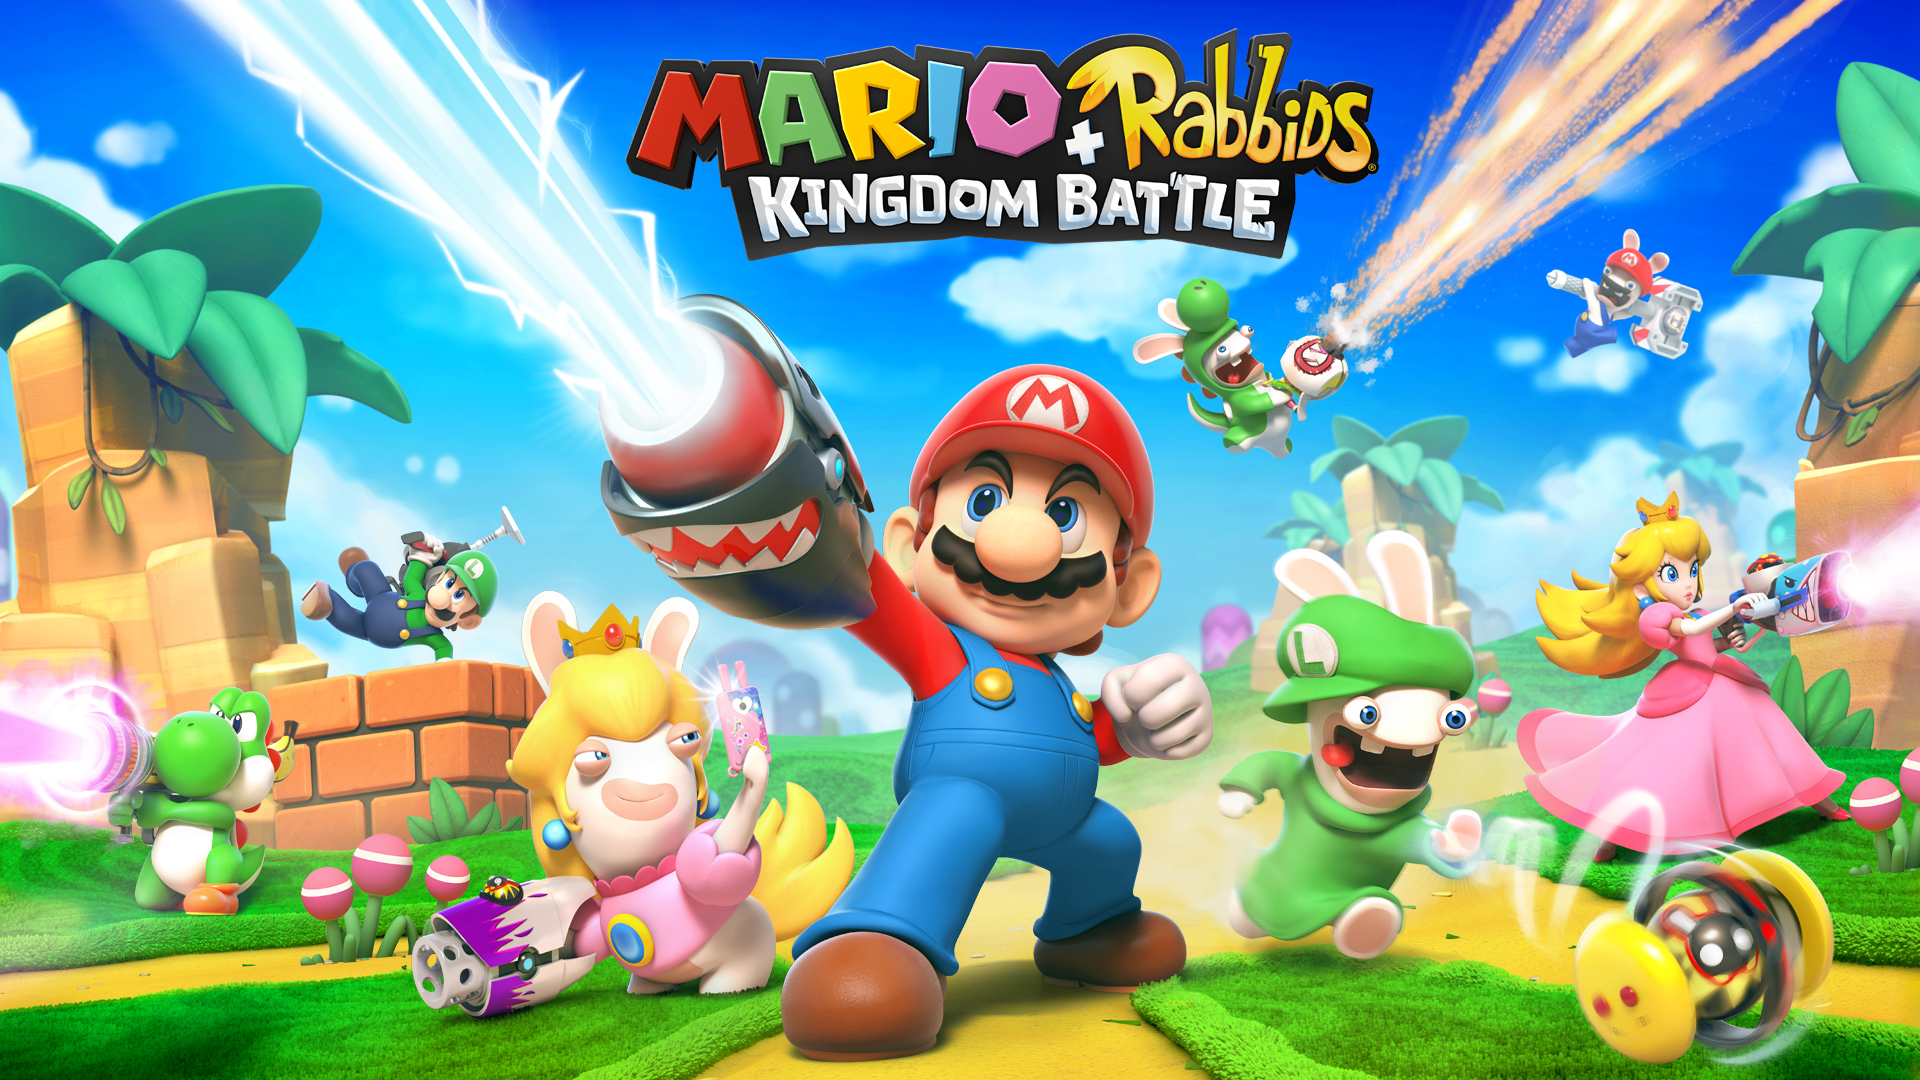 Get Mario + Rabbids: Kingdom Battle on the cheap